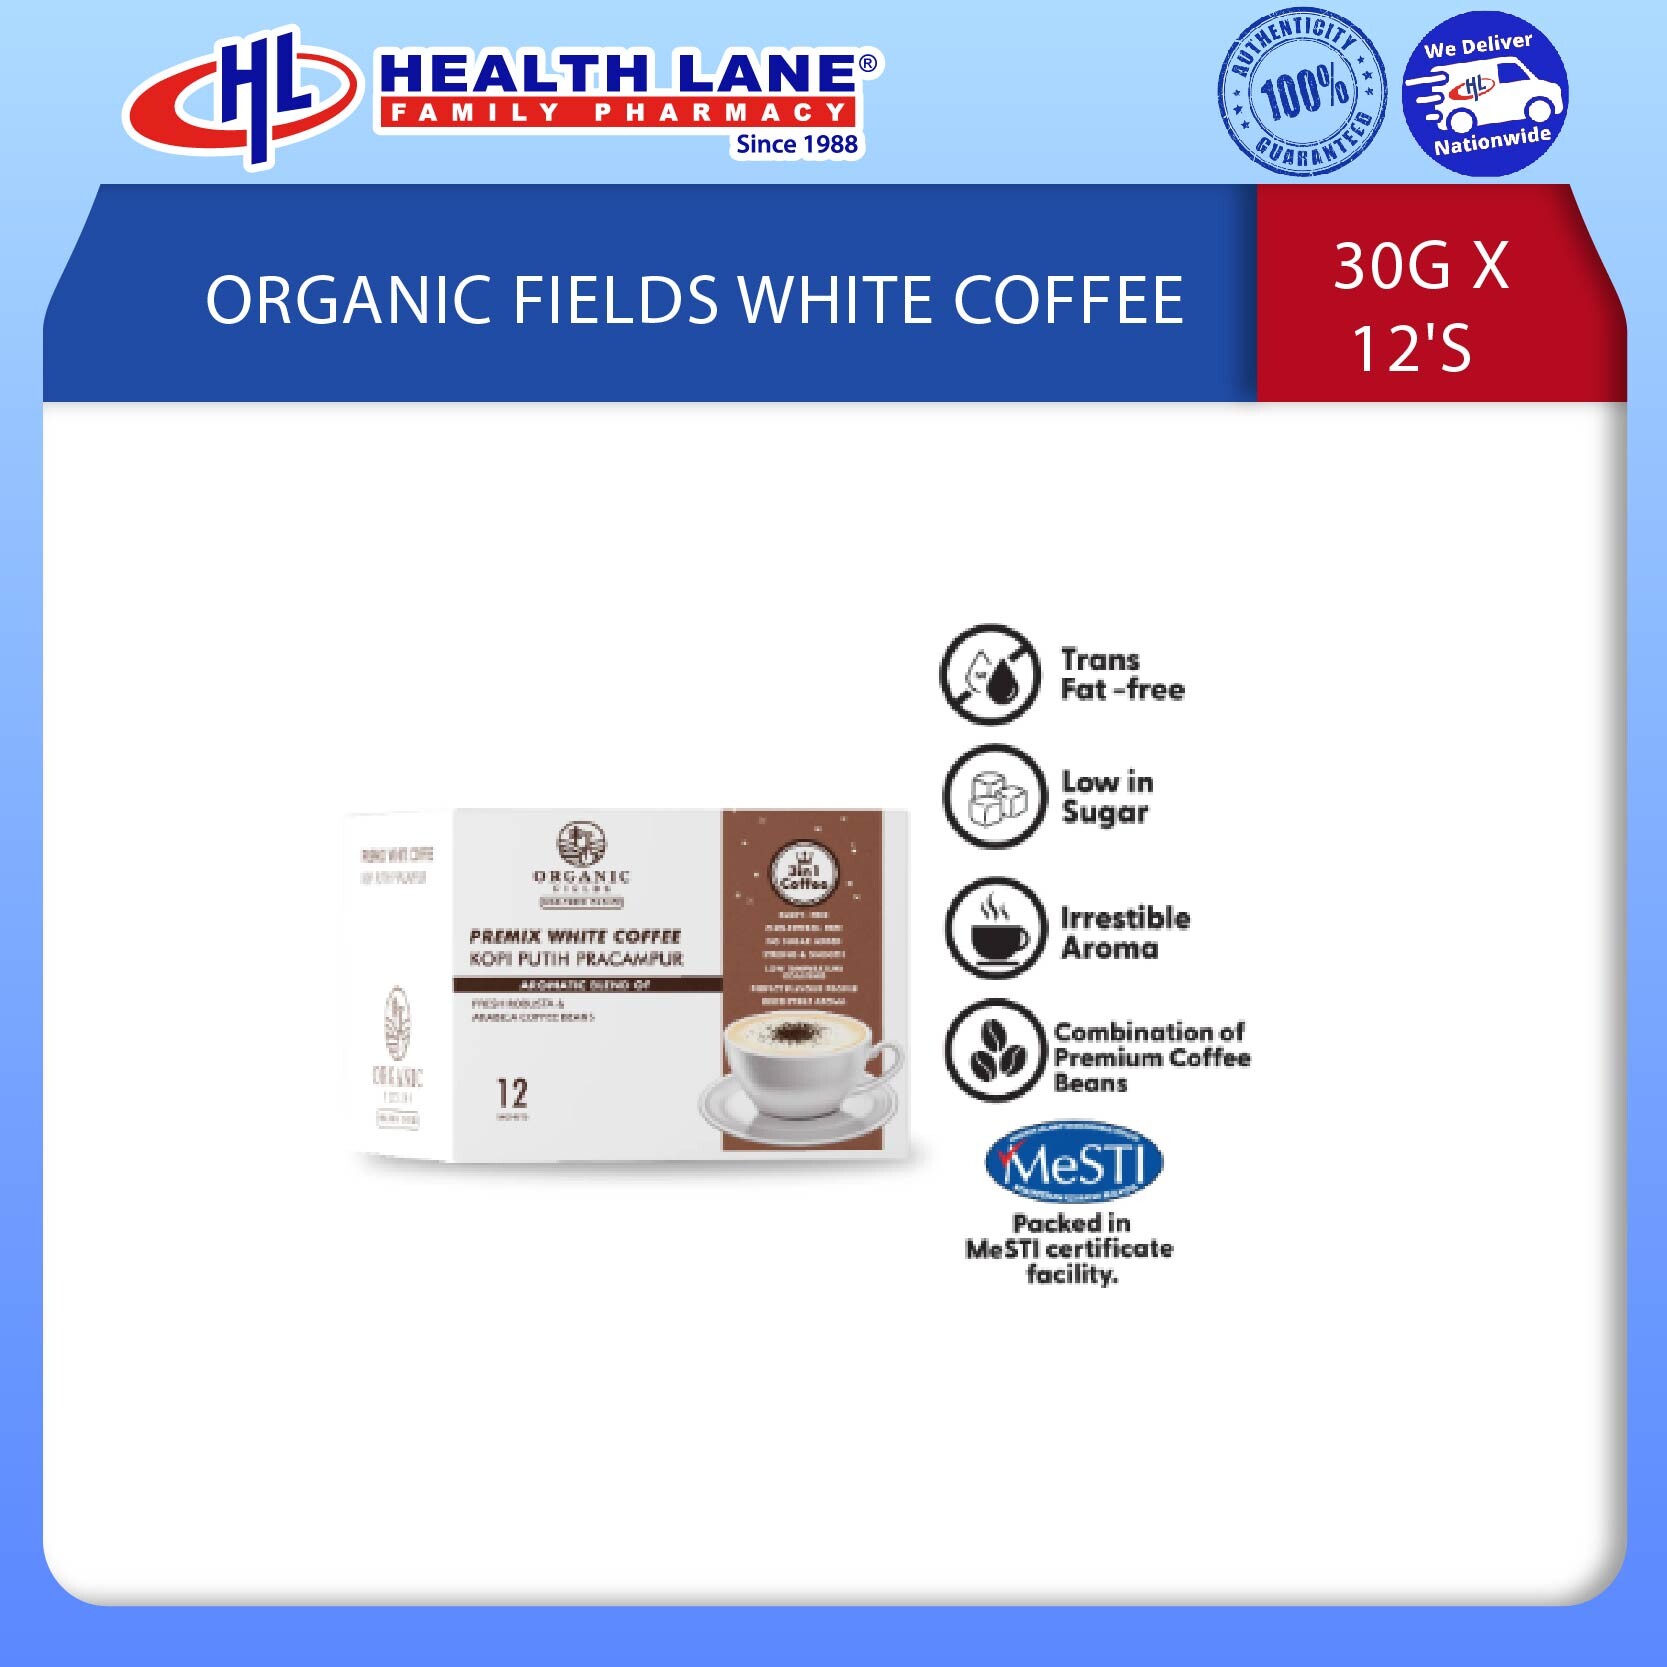 ORGANIC FIELDS WHITE COFFEE 30G X 12'S 